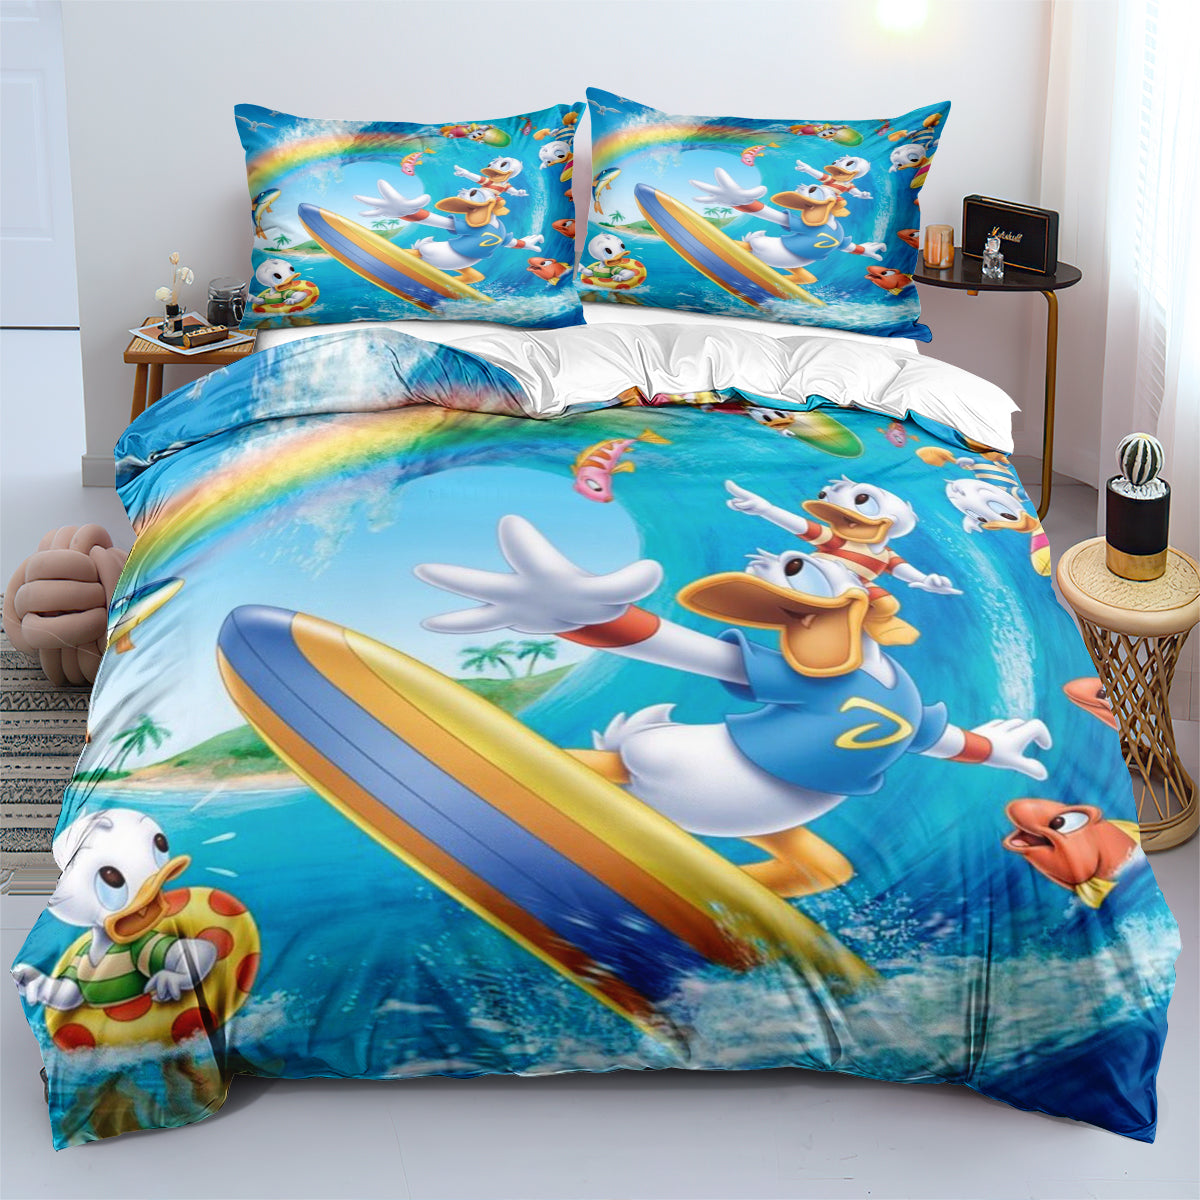 Disney Donald Duck Duvet Cover Quilt Cover Pillowcase Bedding Set